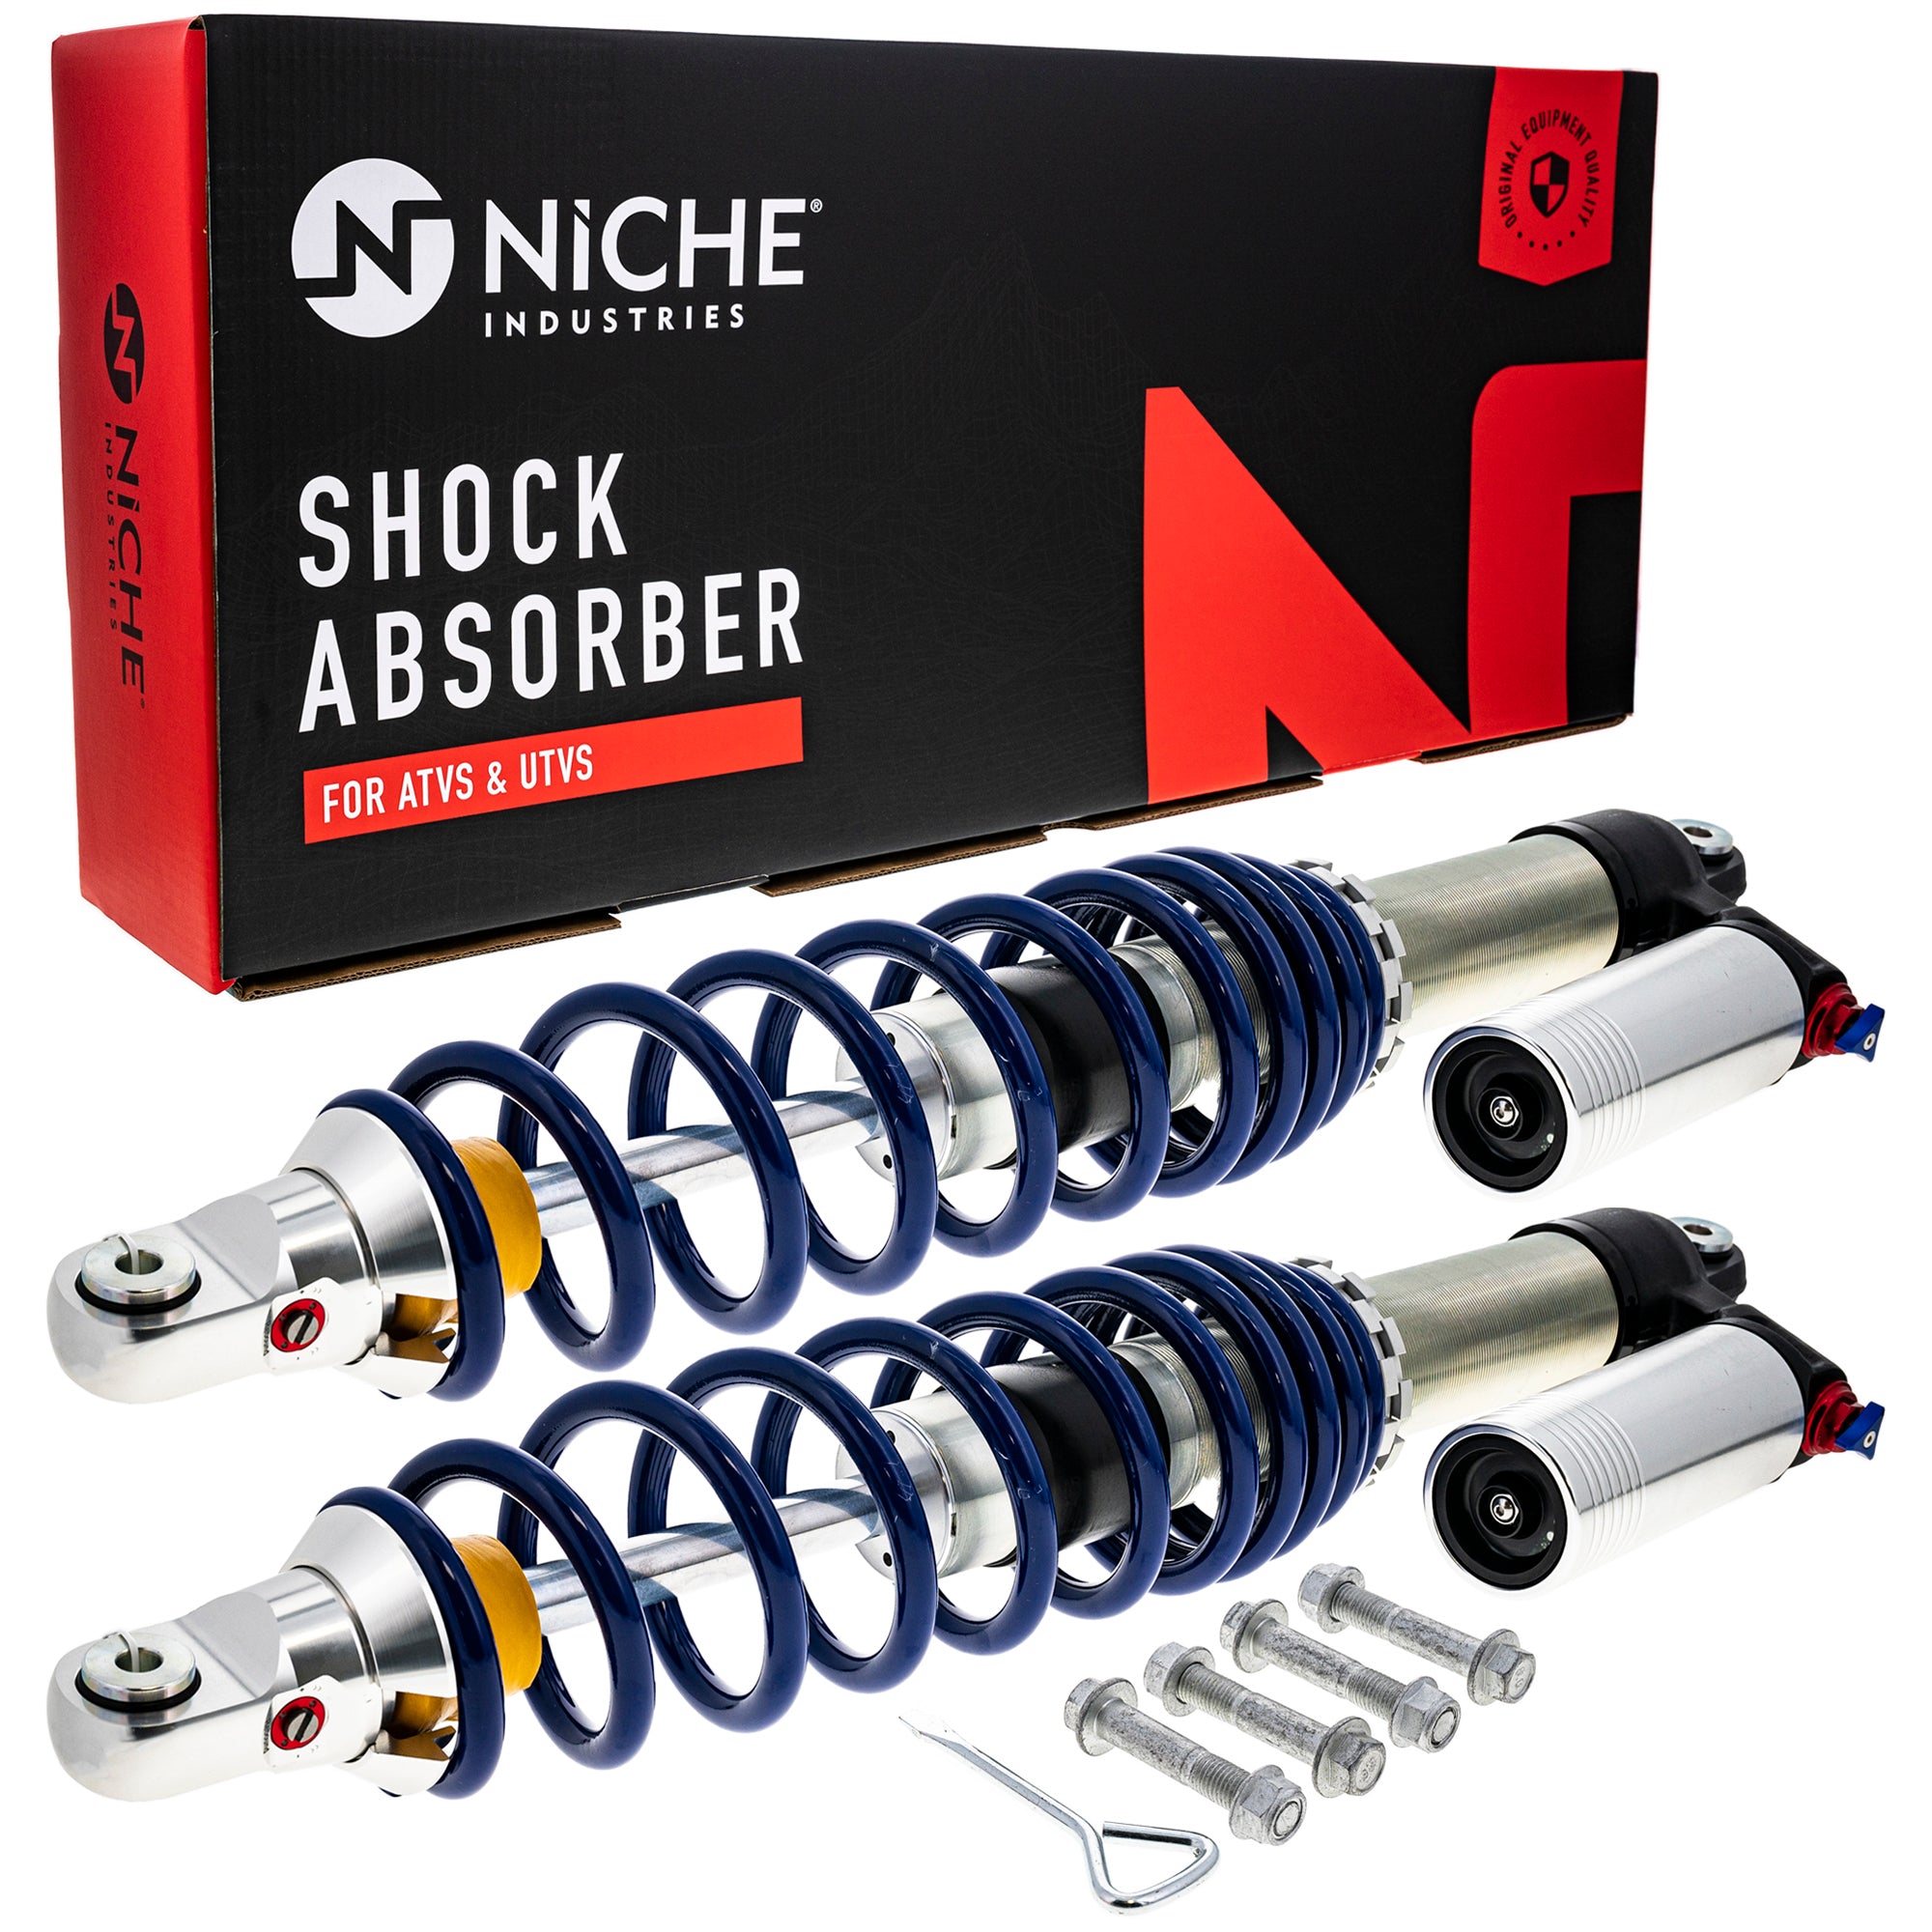 NICHE Shock Absorber Kit